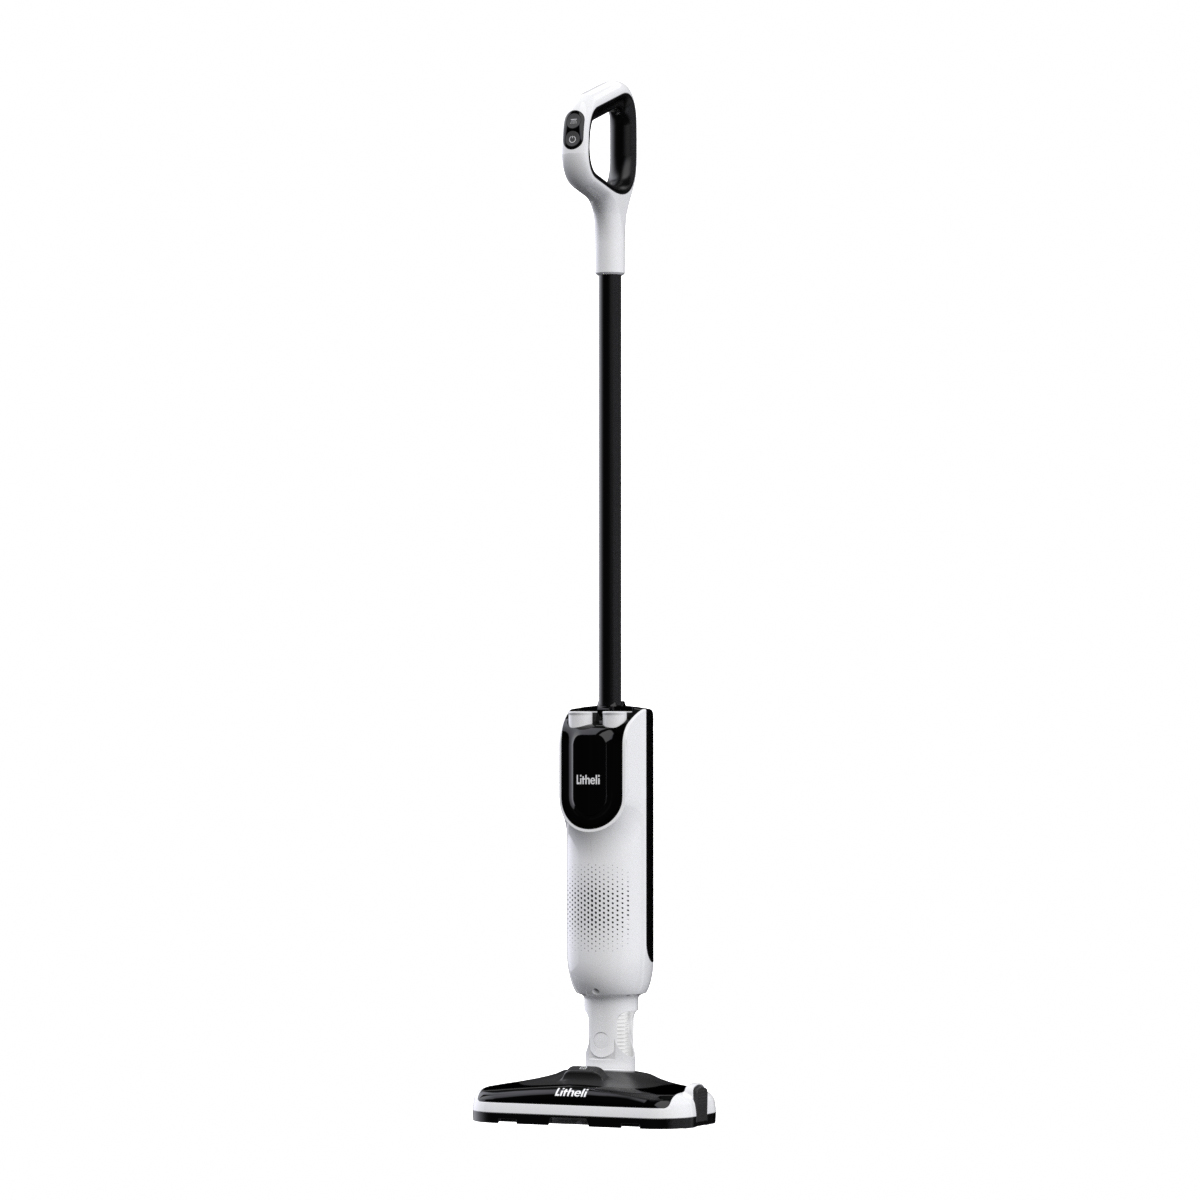 Litheli Cordless Vacuum Mop Cleaner, 2-in-1 Hard Floor Stick